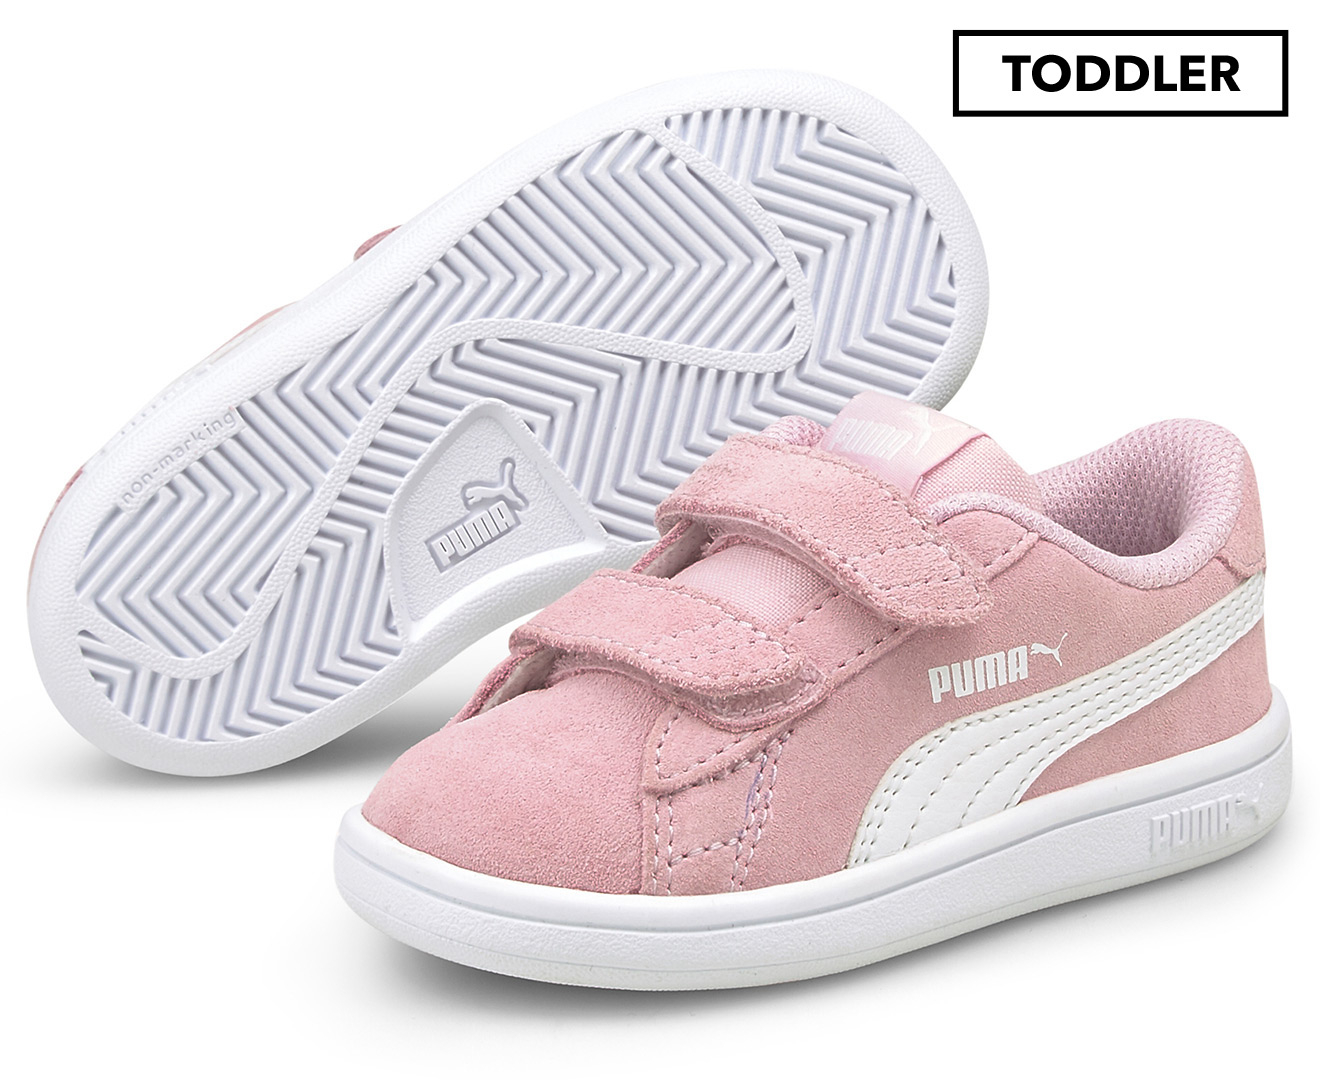 Puma Toddler Girls\' Smash V2 Suede Sneakers - Pink Lady/Puma White